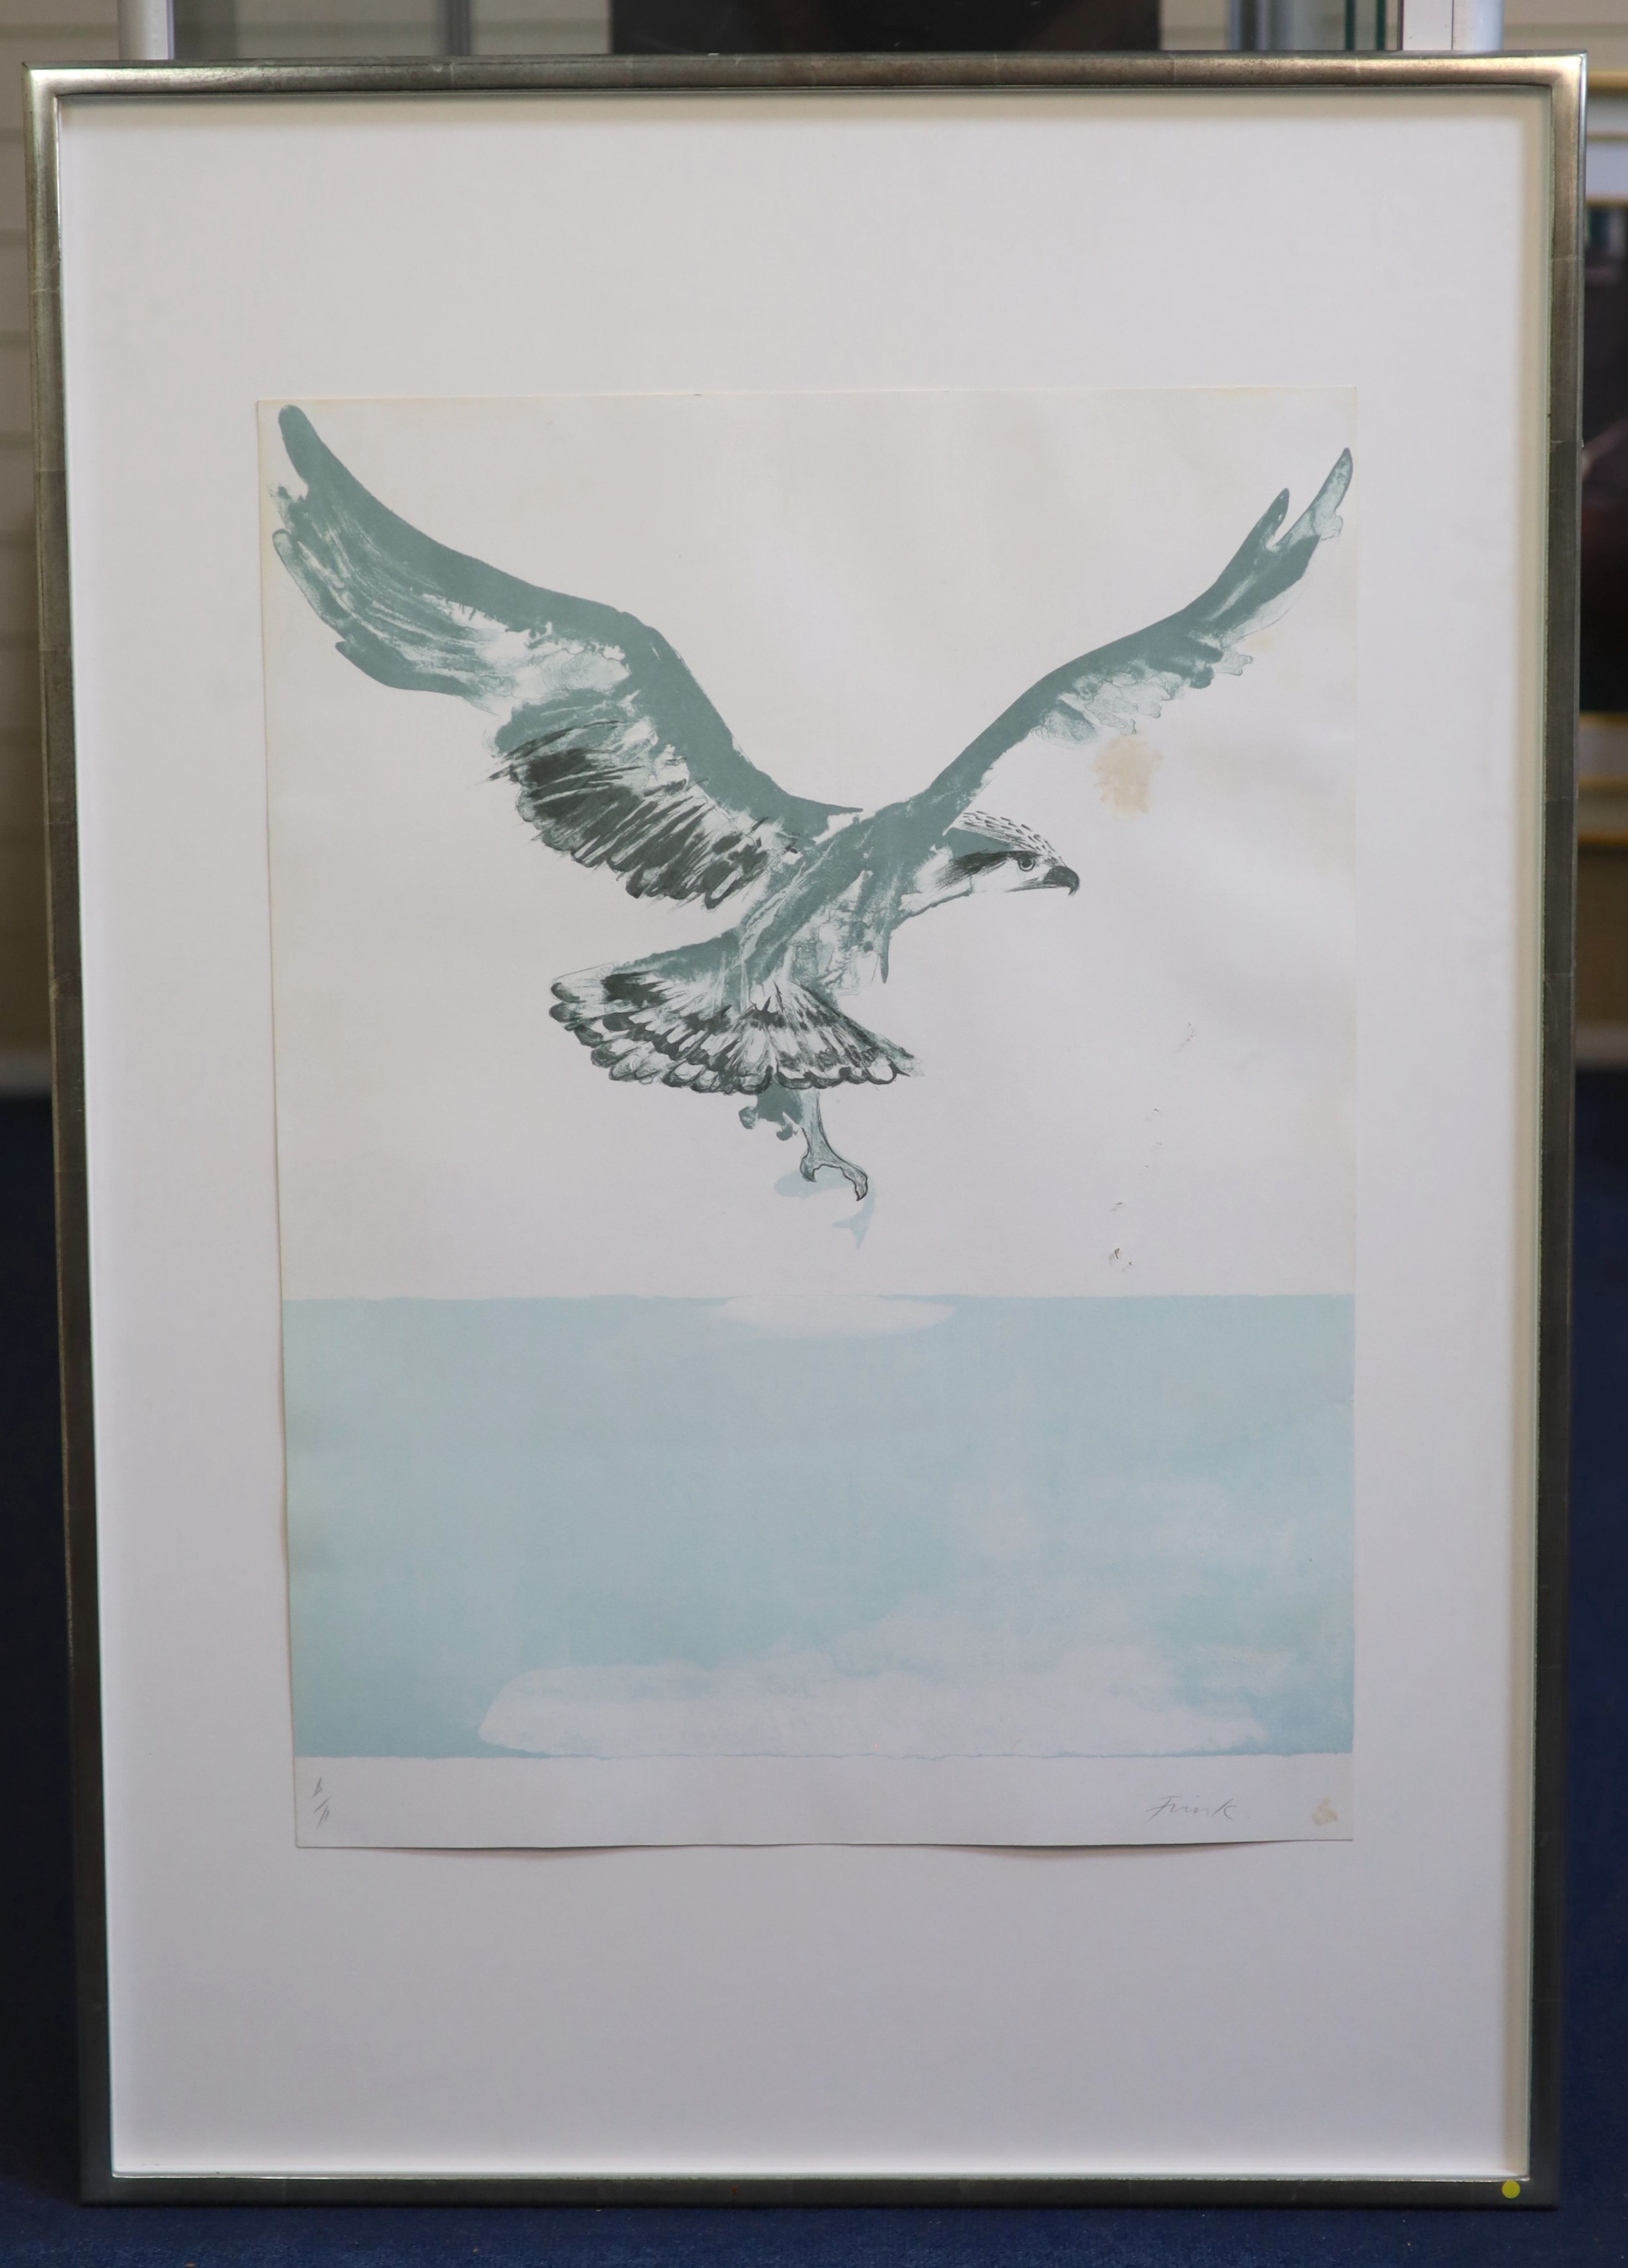 Dame Elizabeth Frink (1930-1993), Osprey, 1974, lithograph printed in colours, 64.5 x 47cm